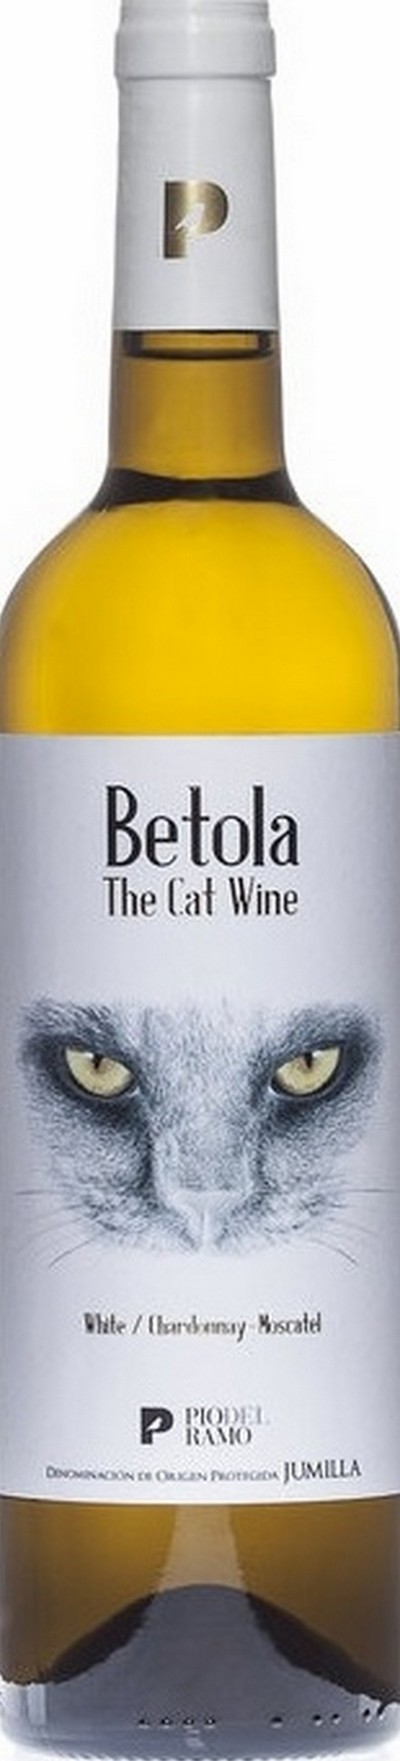 verdejo-the-cat-wine-ecologico-2020